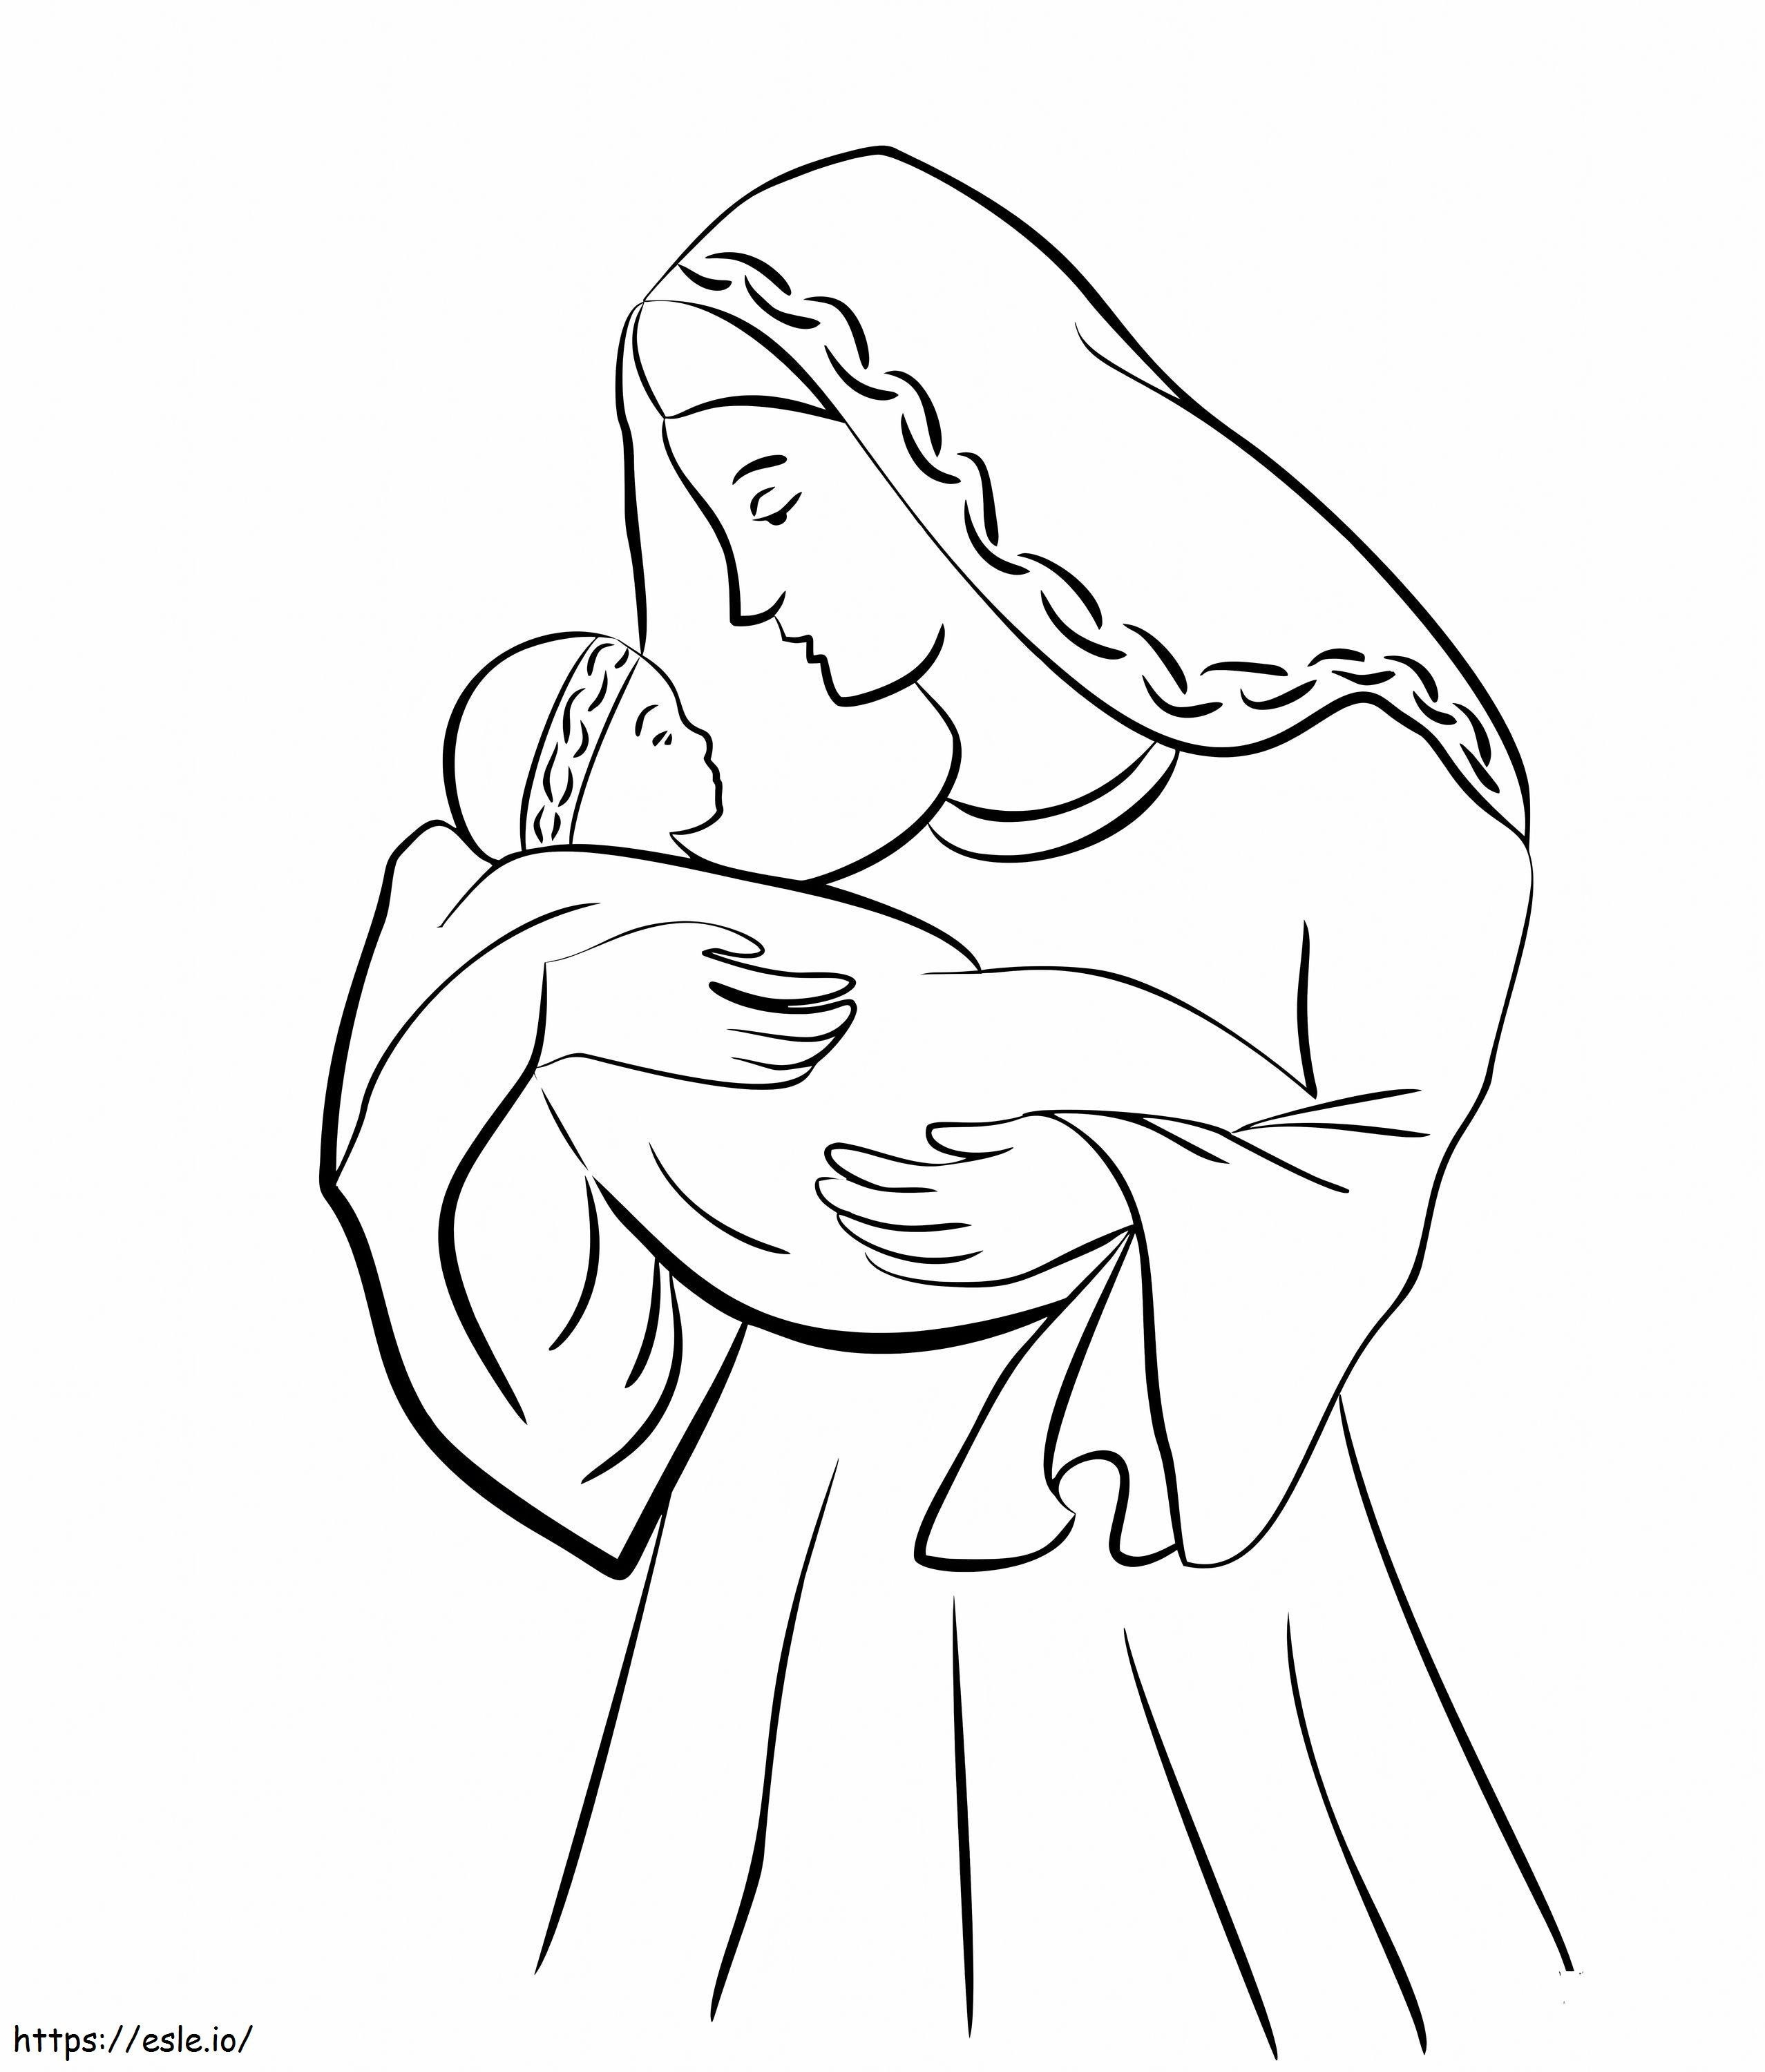 Imprimir Imagem Mãe De Jesus Para Colorir para colorir